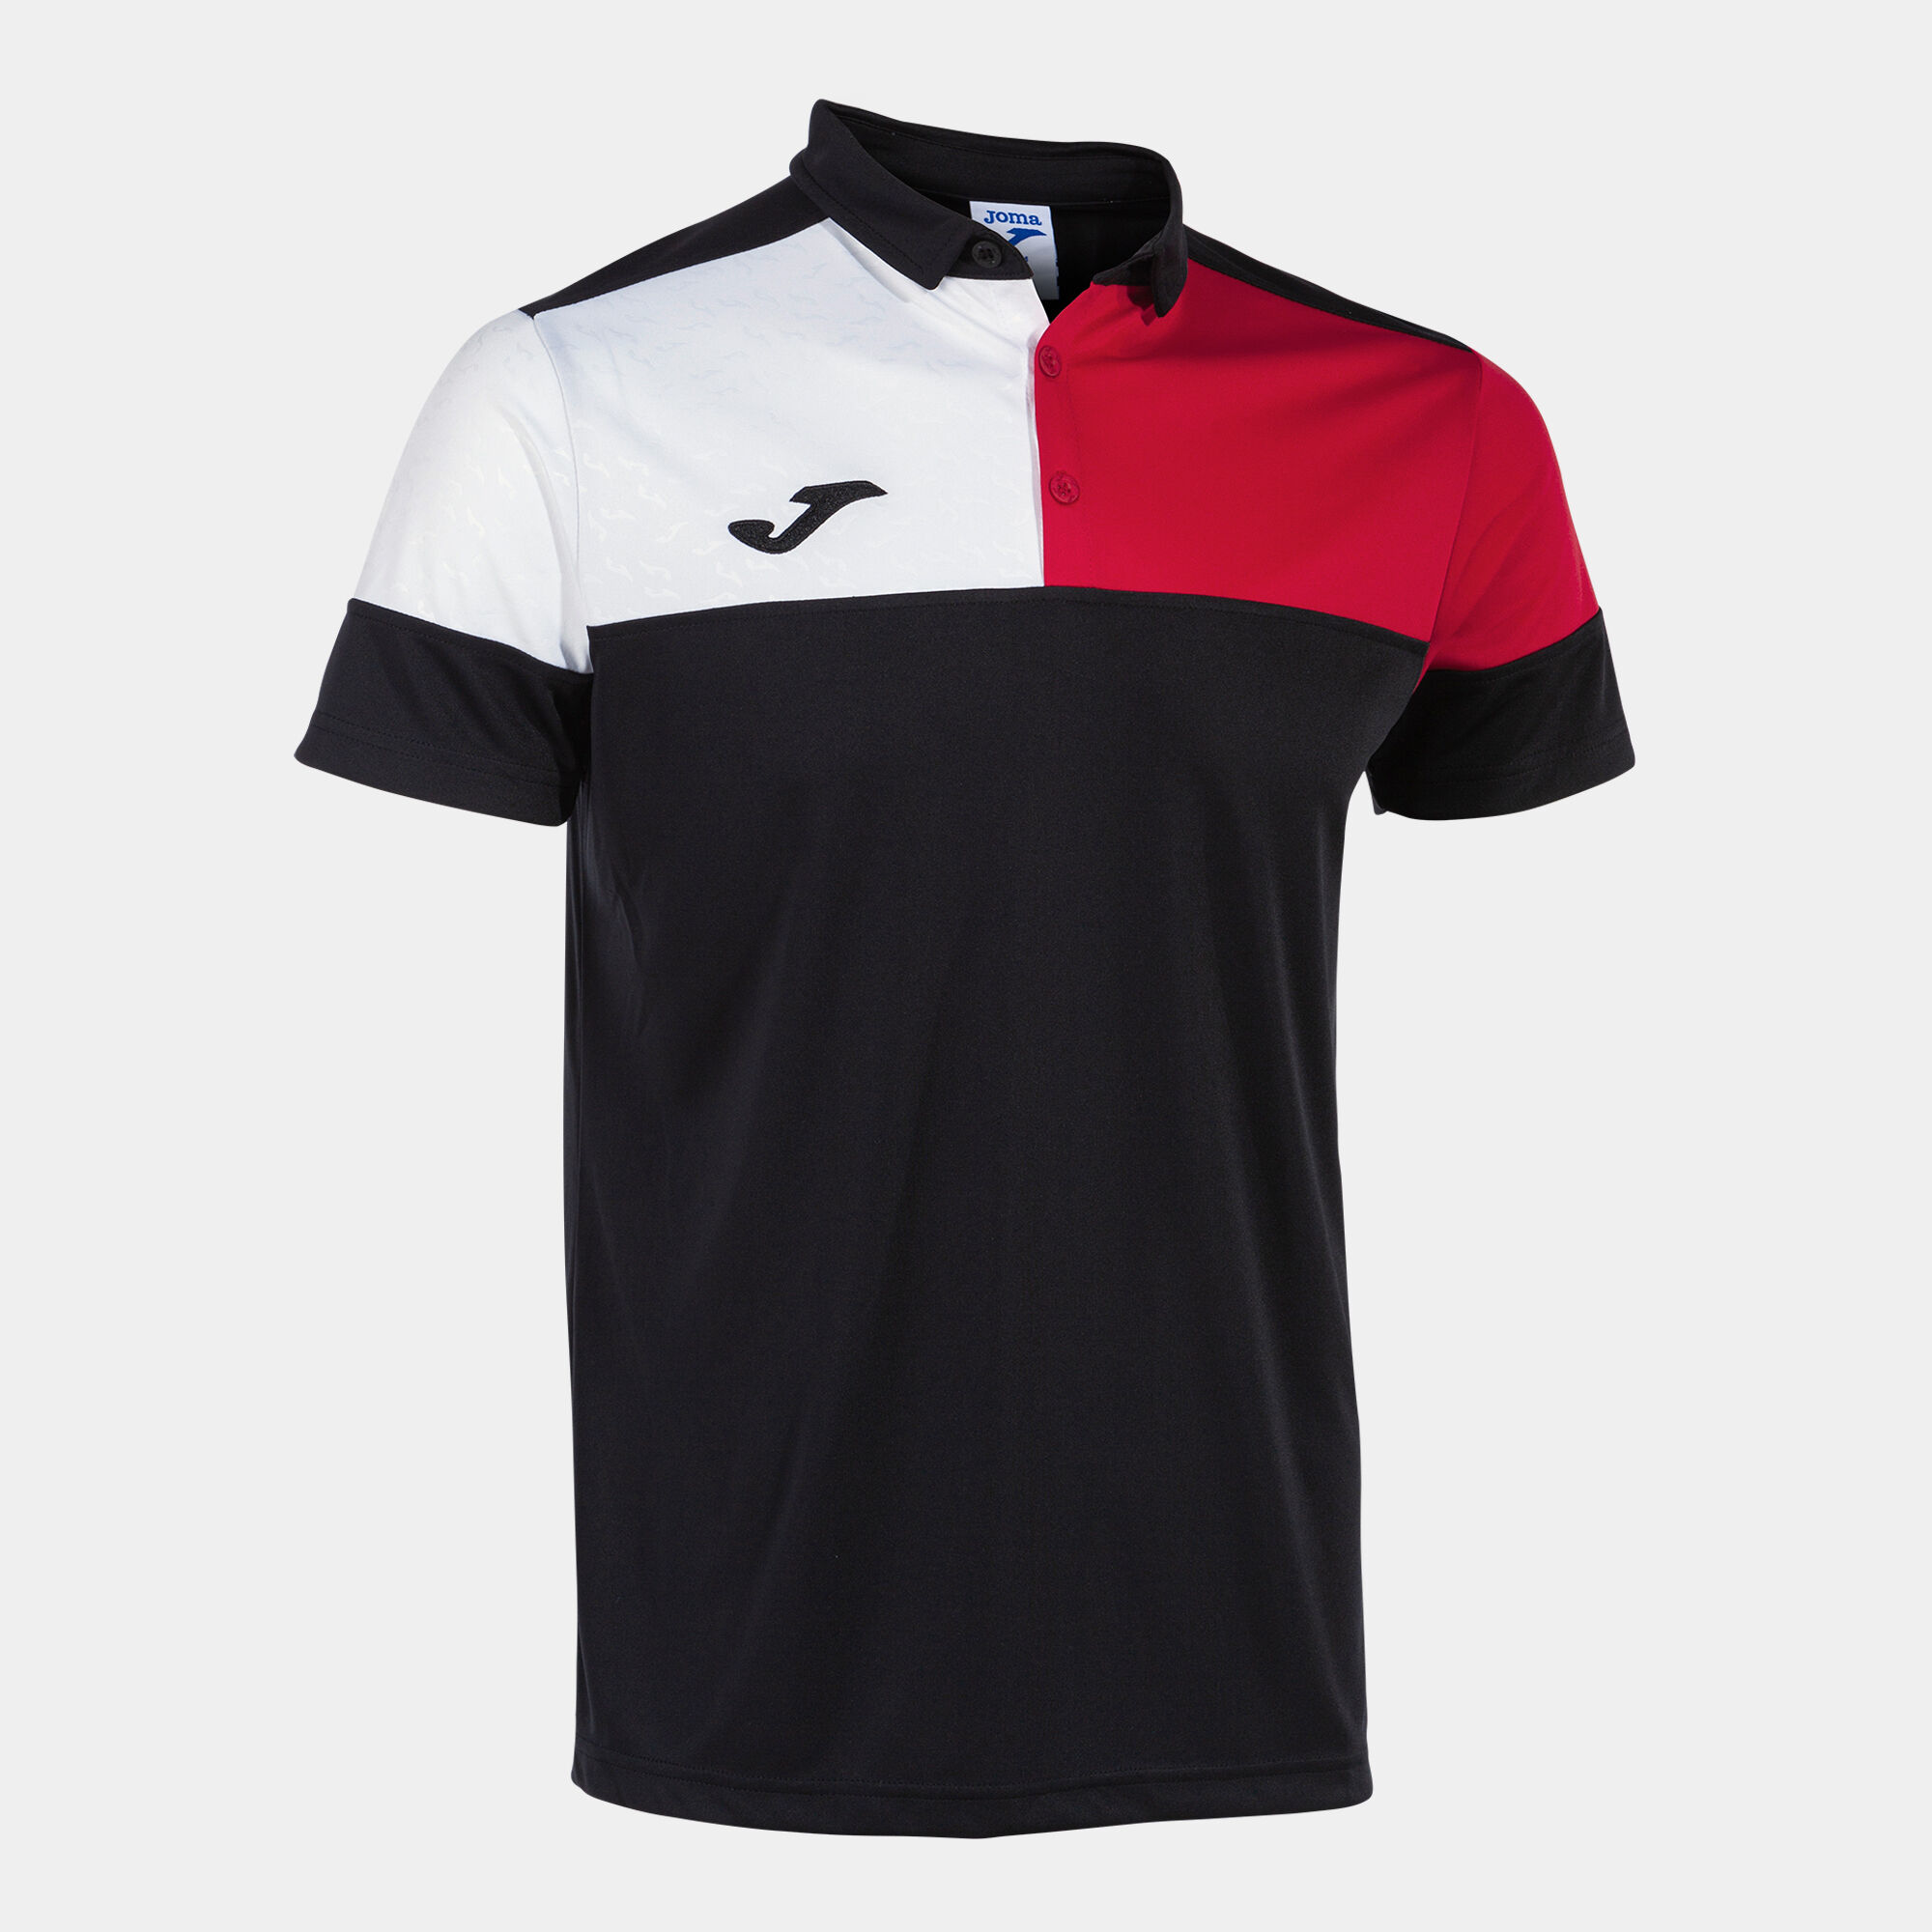 Polo shirt short-sleeve man Crew V black red